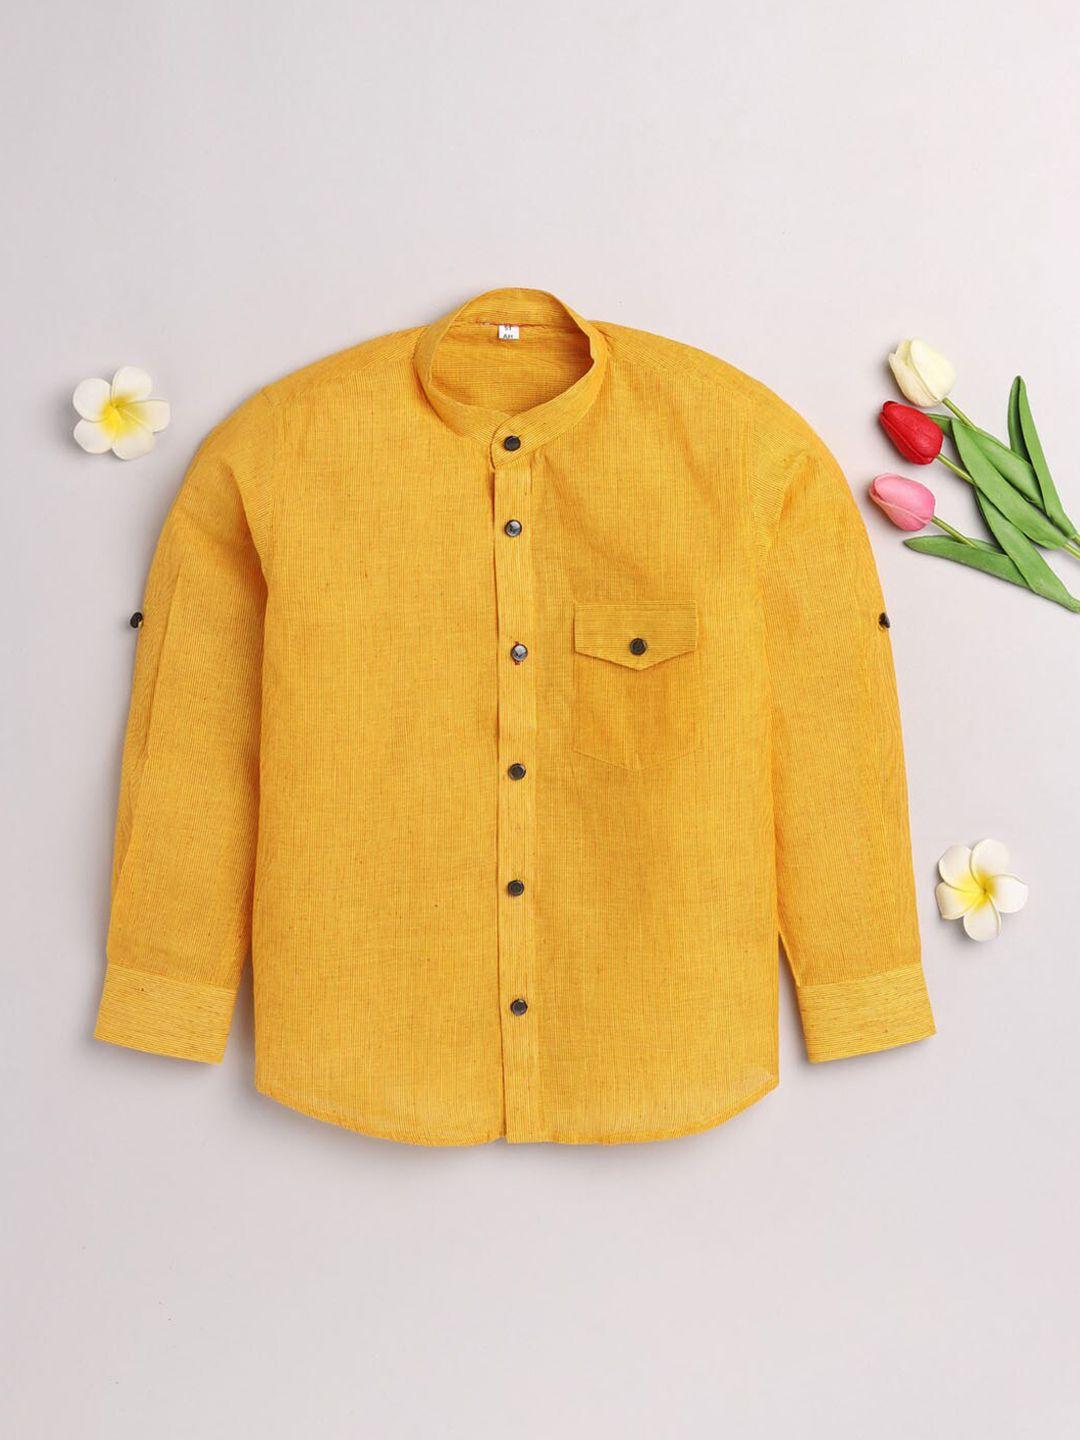 jbn creation boys mustard yellow classic cotton shirt